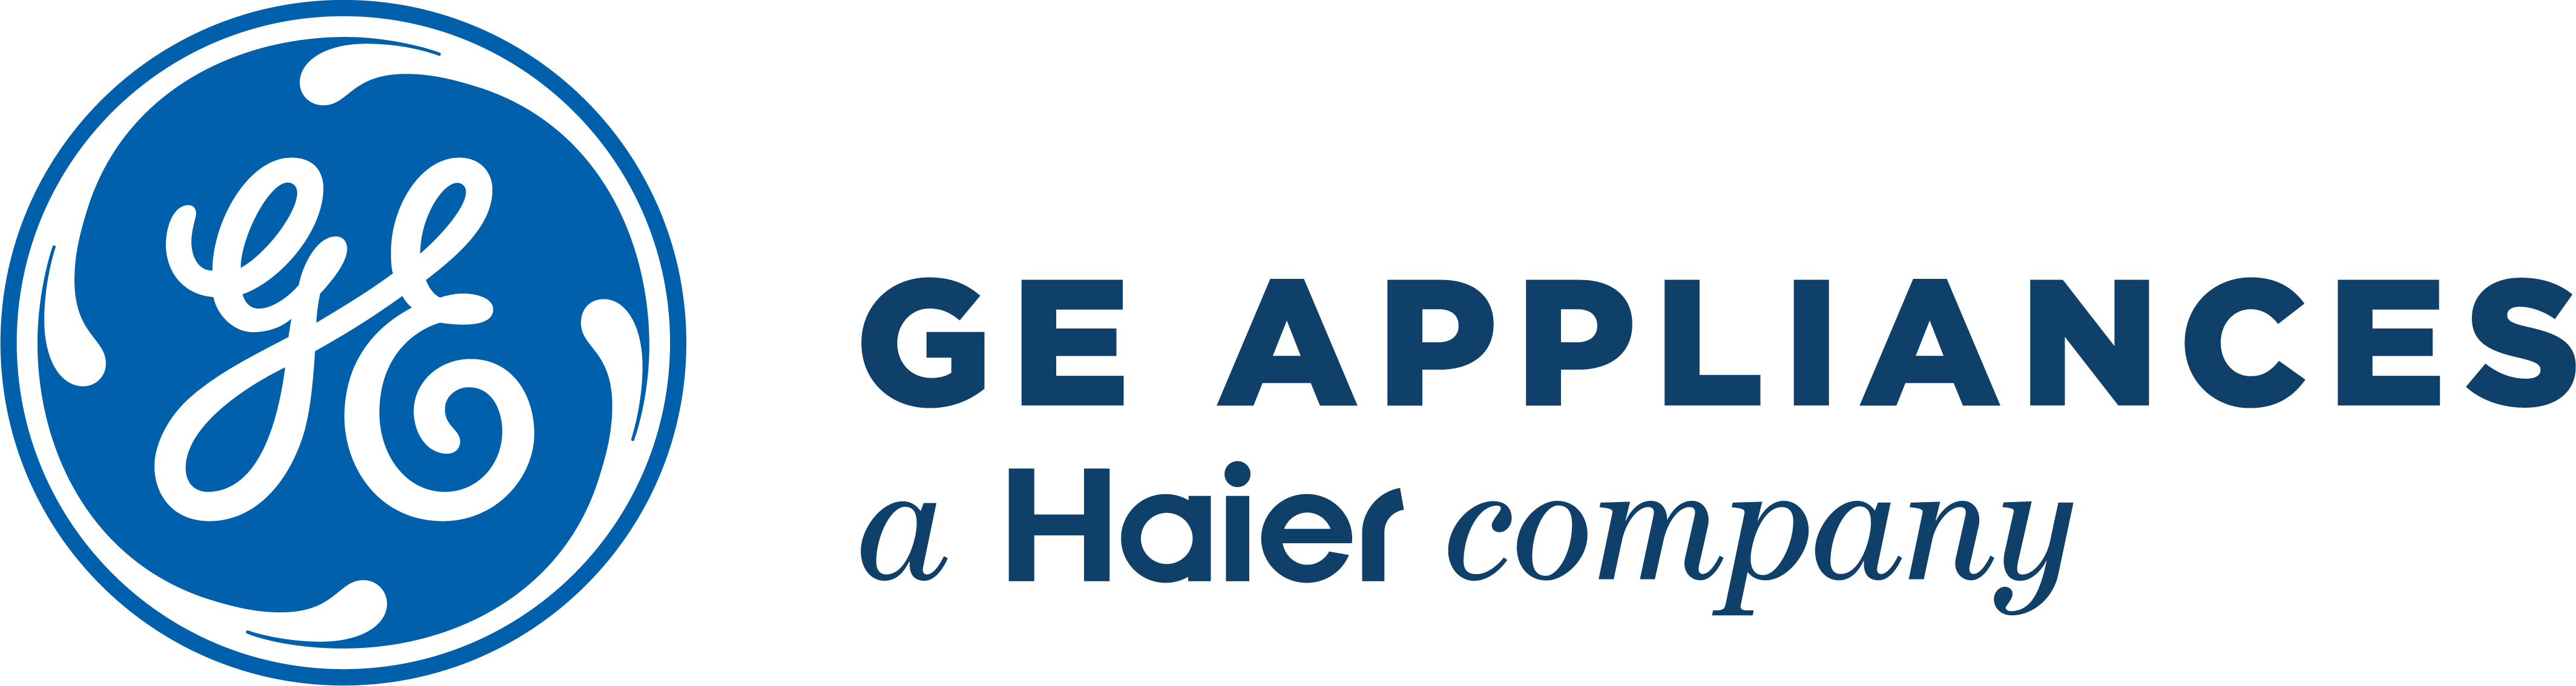 Haier US Appliance Solutions, Inc., d/b/a GE Appliances company logo